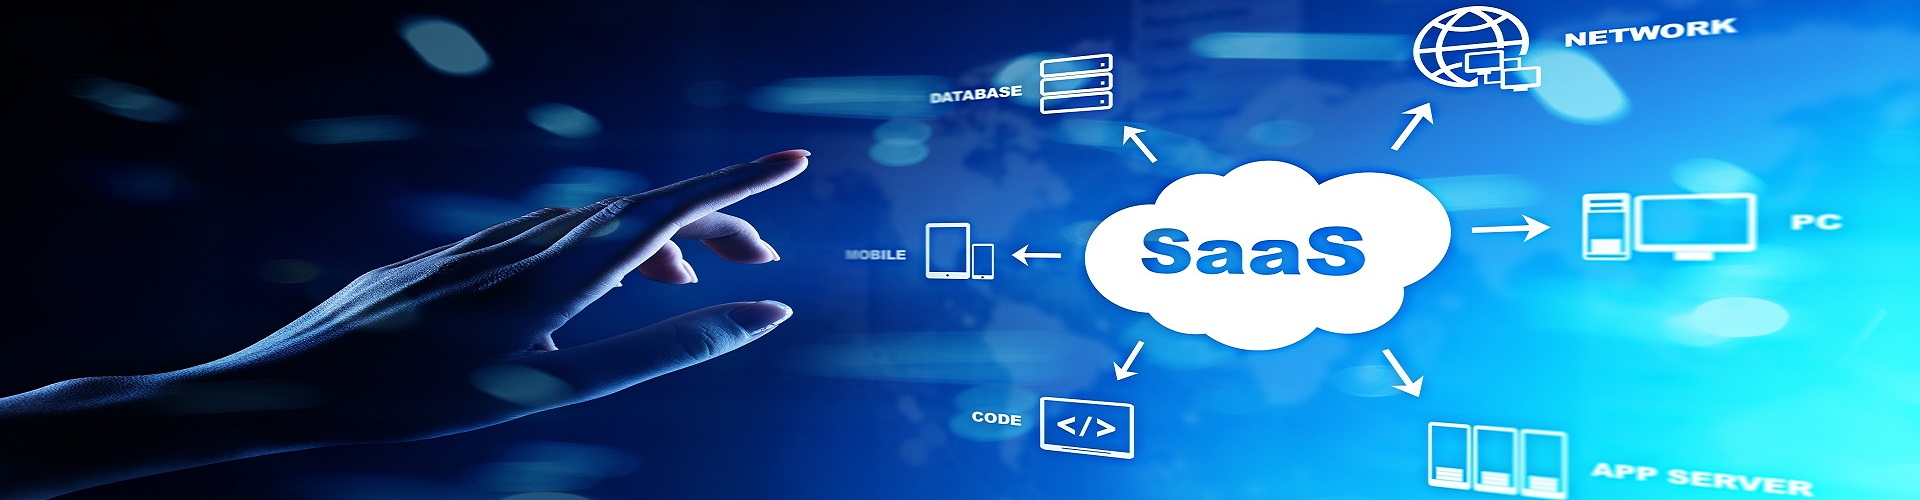 SAAS Software Development Services